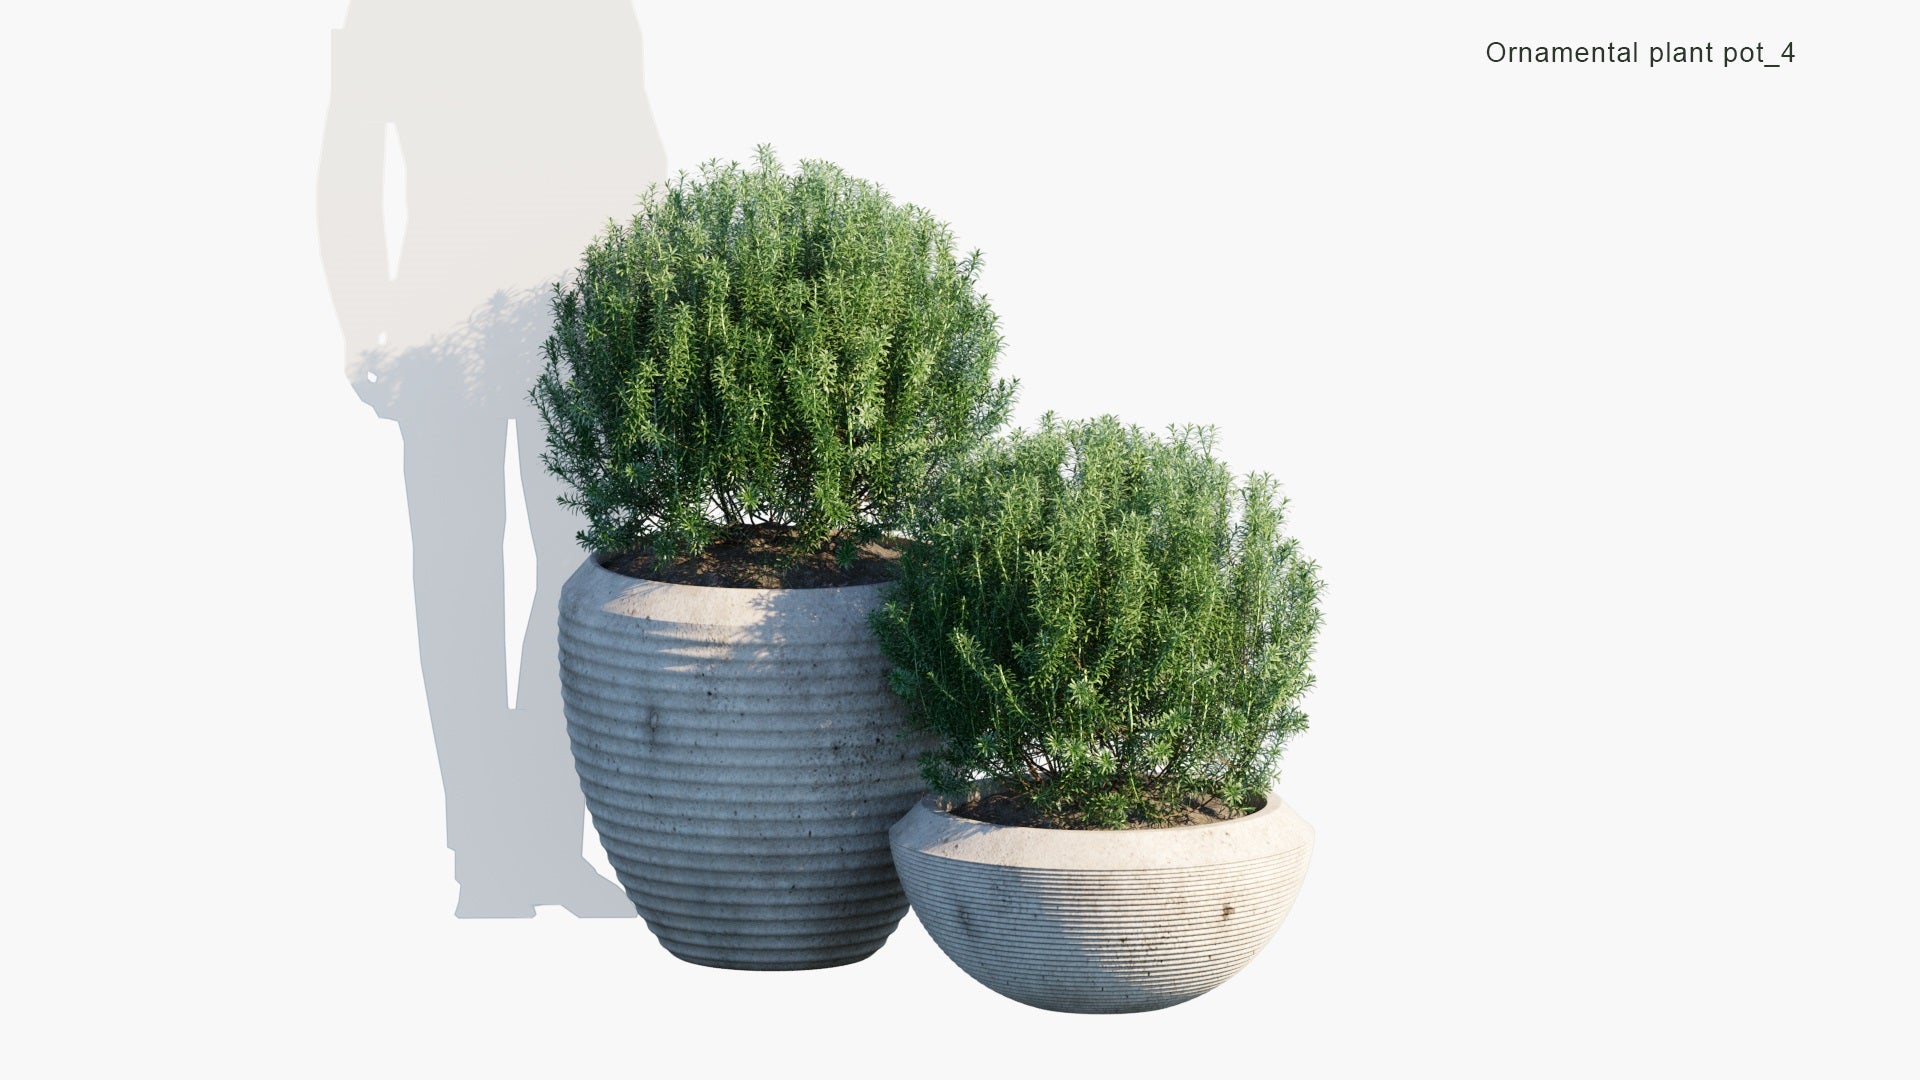 Ornamental Pot Plant 04 - Rosmarinus Officinalis 'Albus' (3D Model)